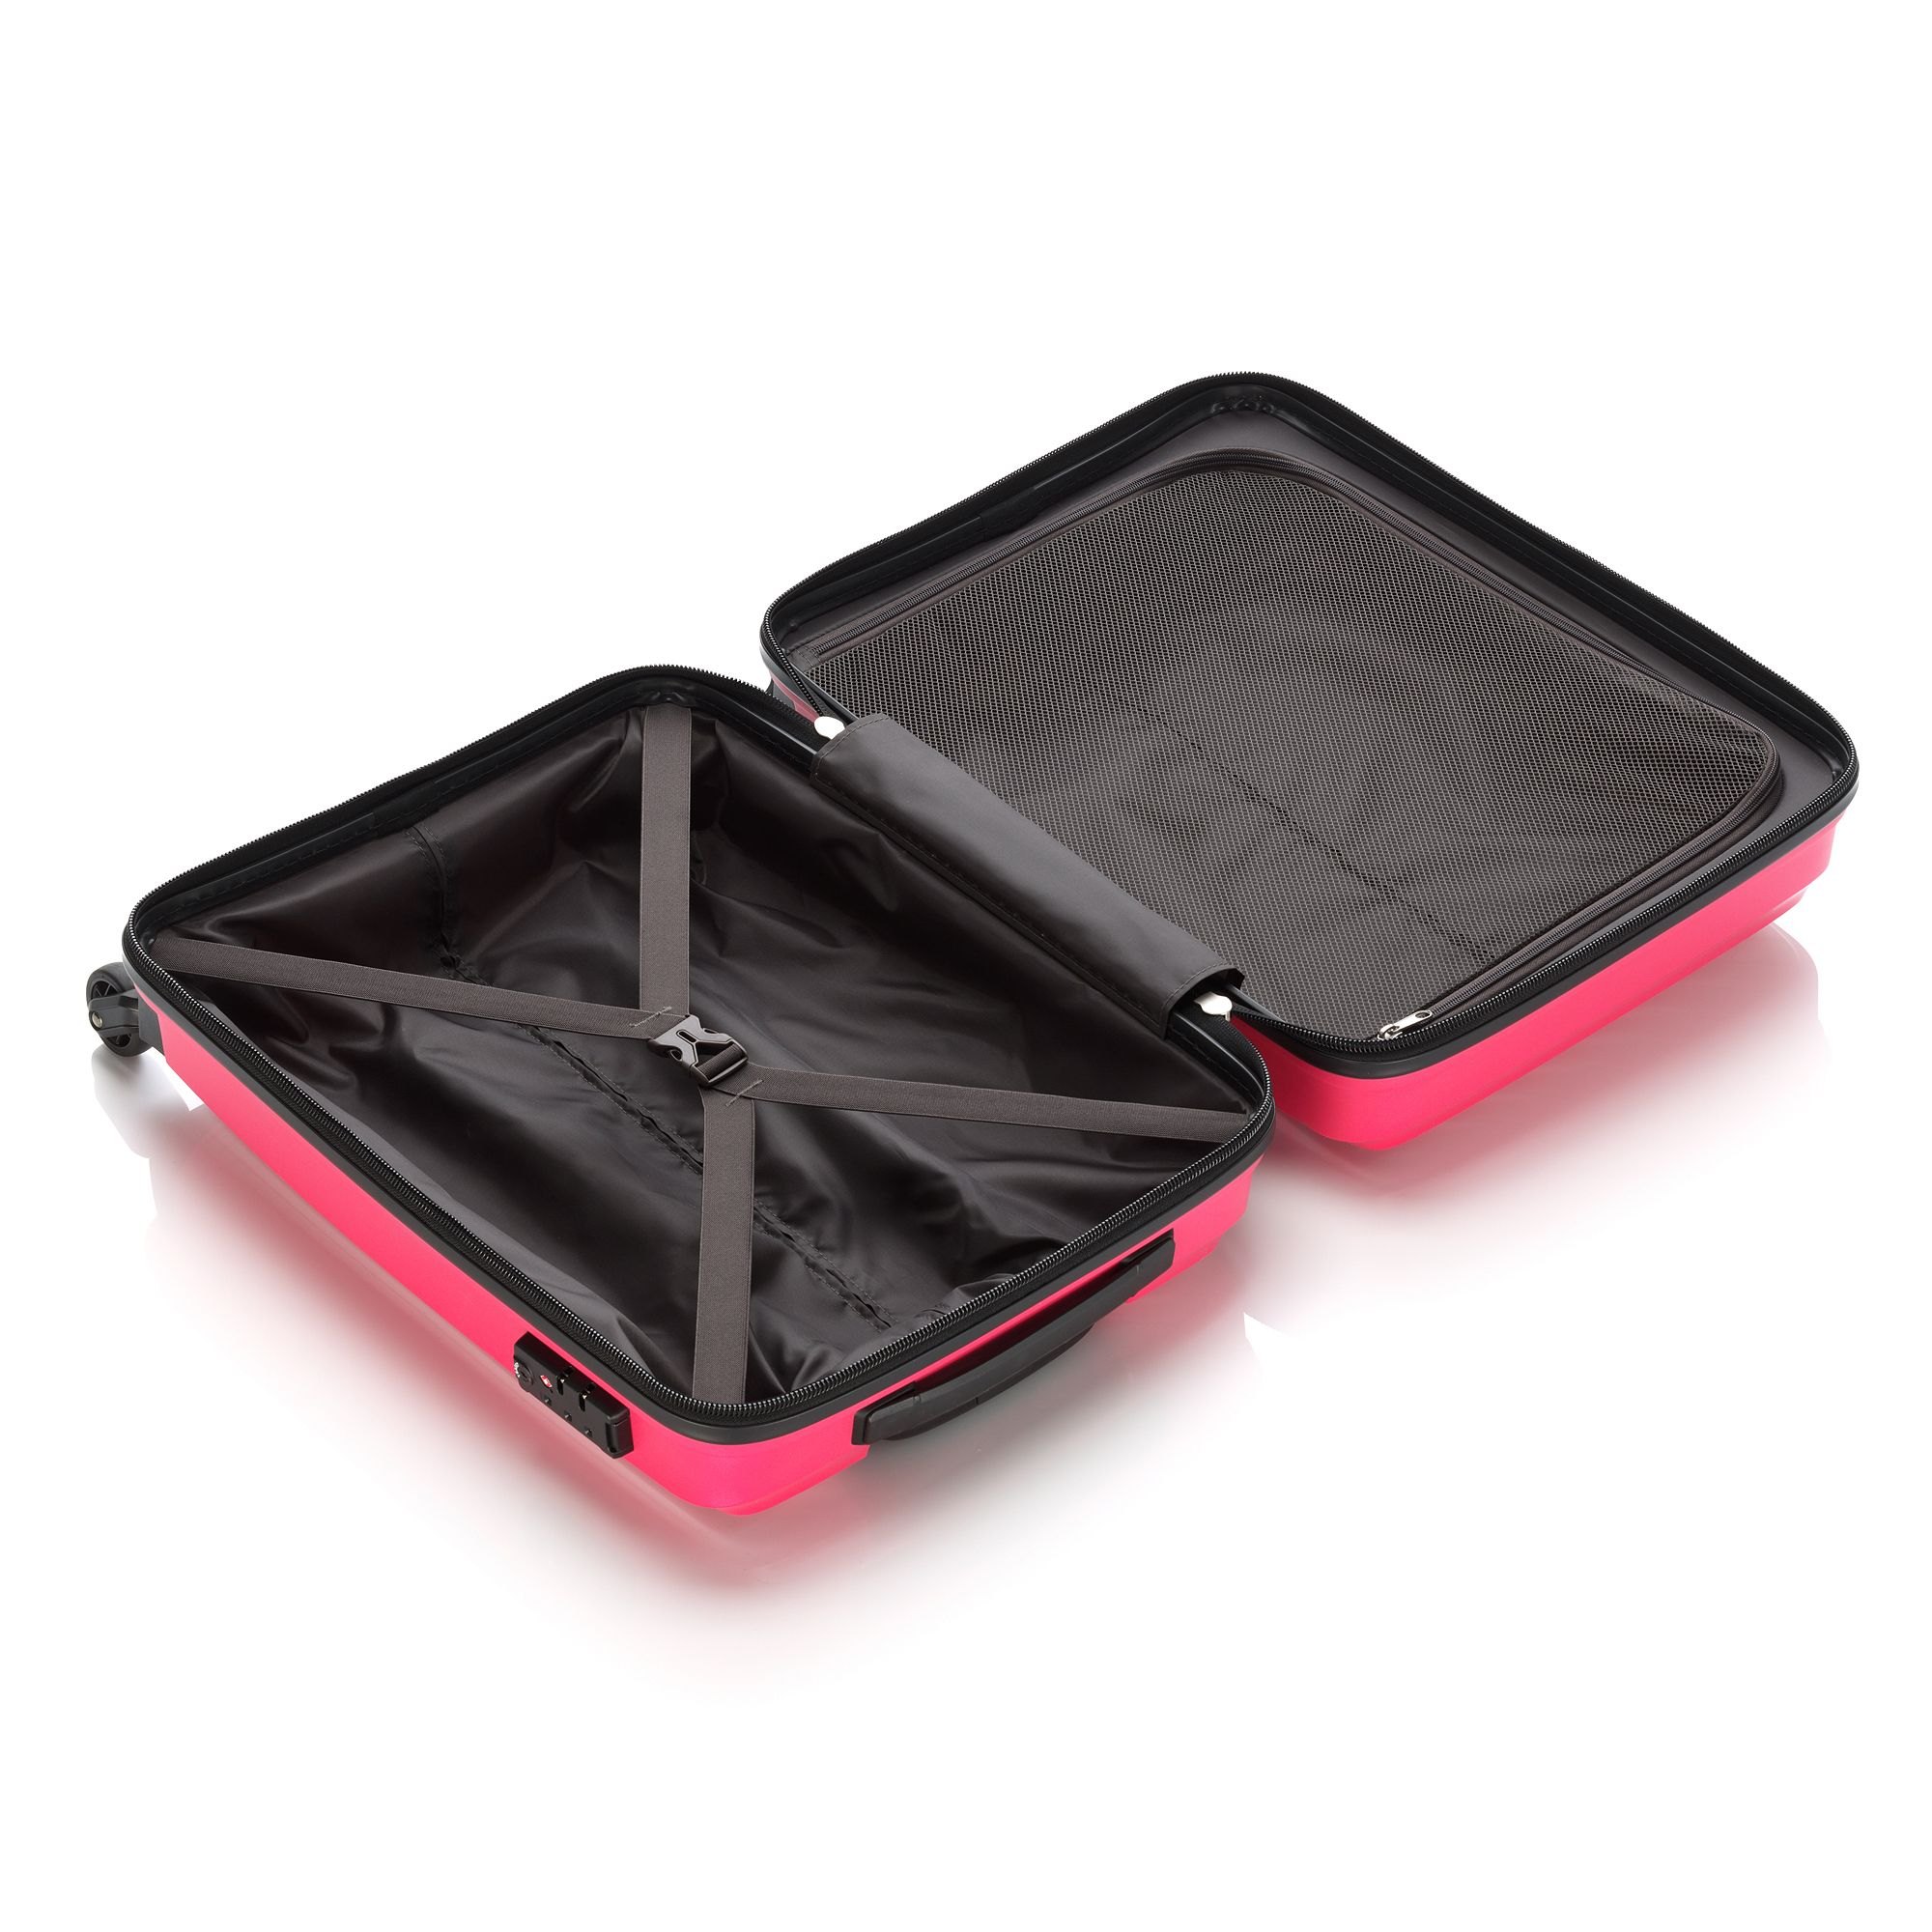 Tripp Chic Hot Pink Cabin Suitcase 55x39x20cm - Tripp Ltd